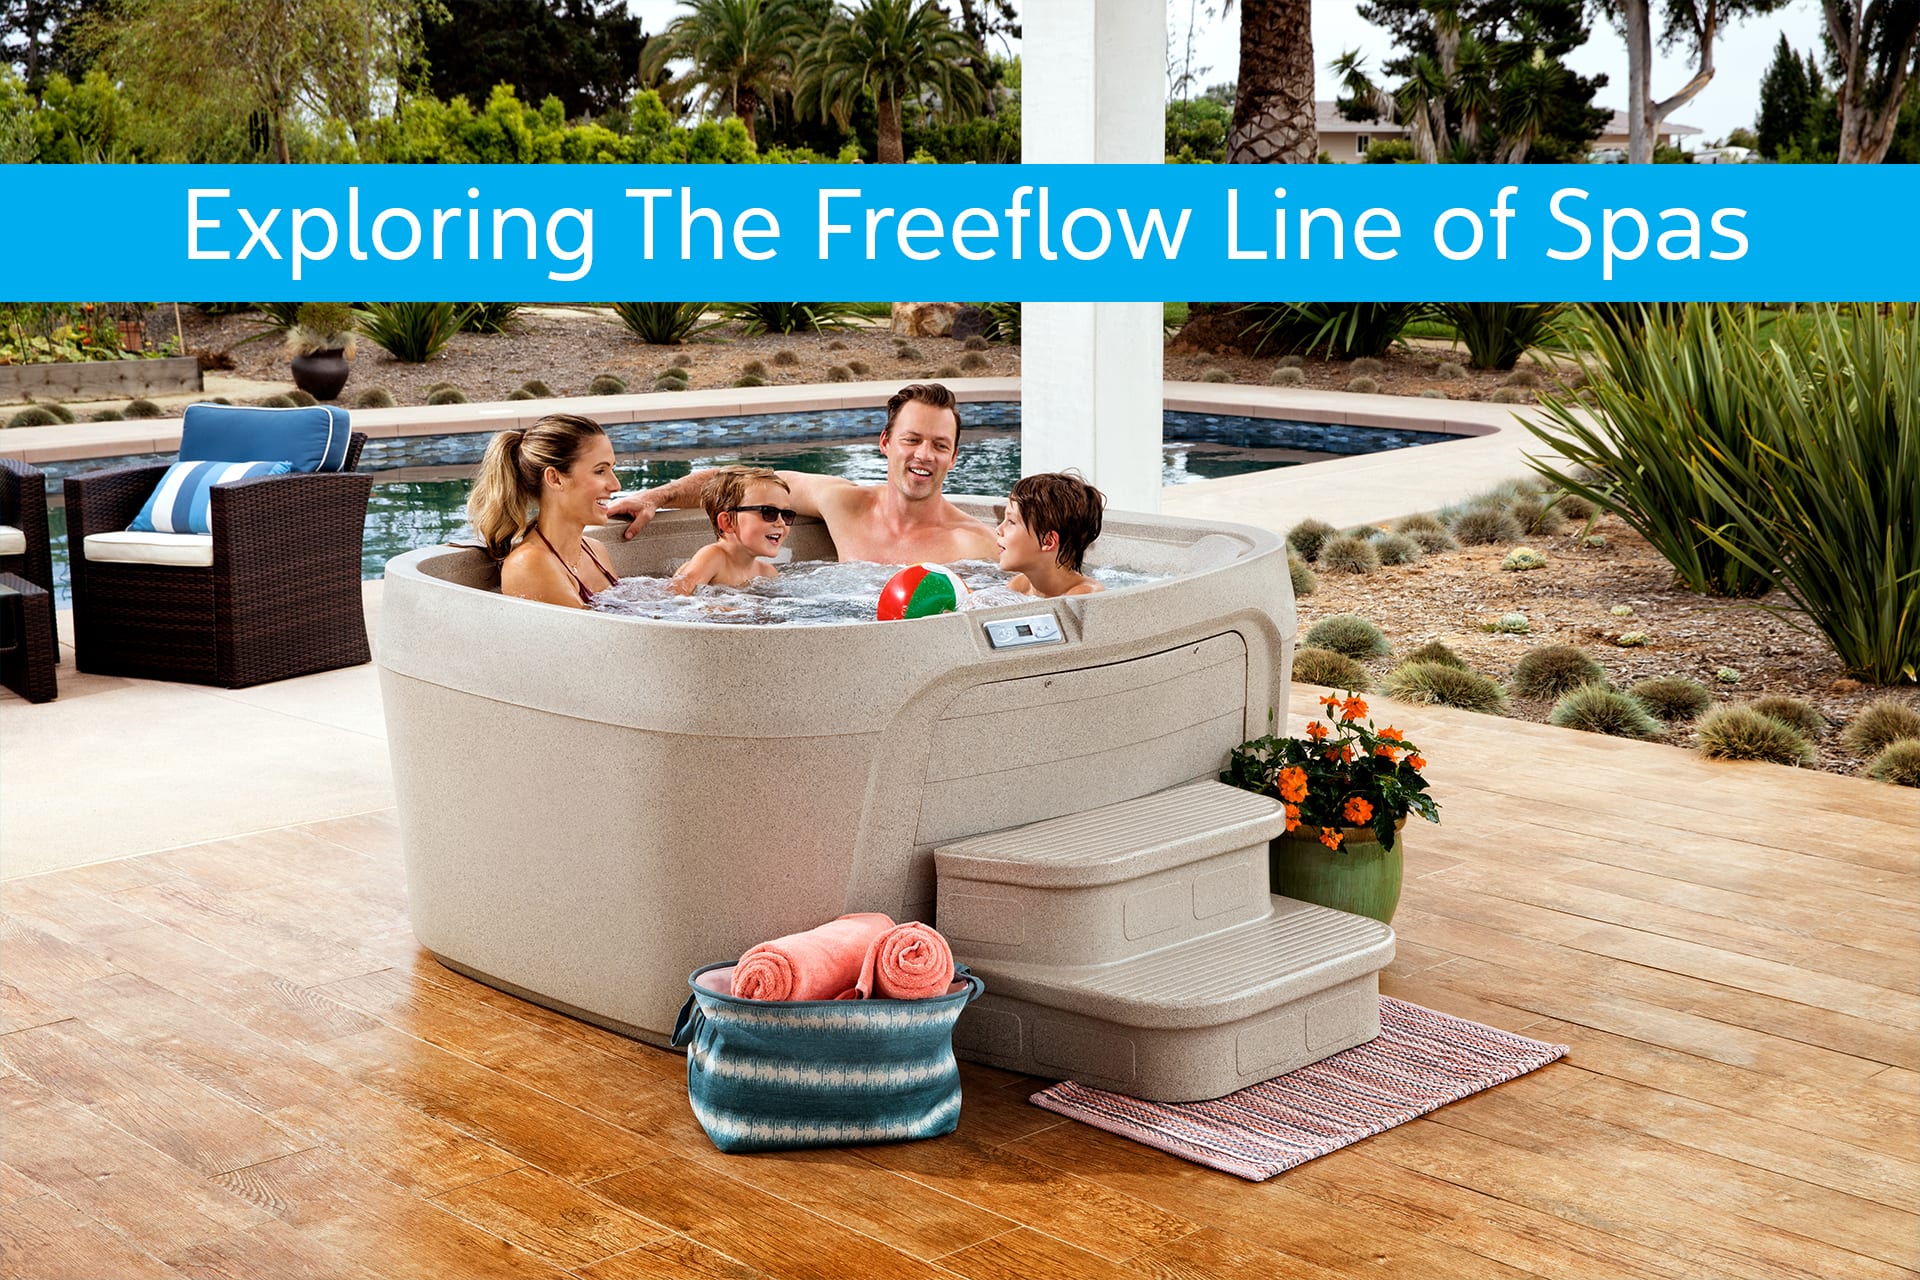 Exploring the Freeflow Line of Spas